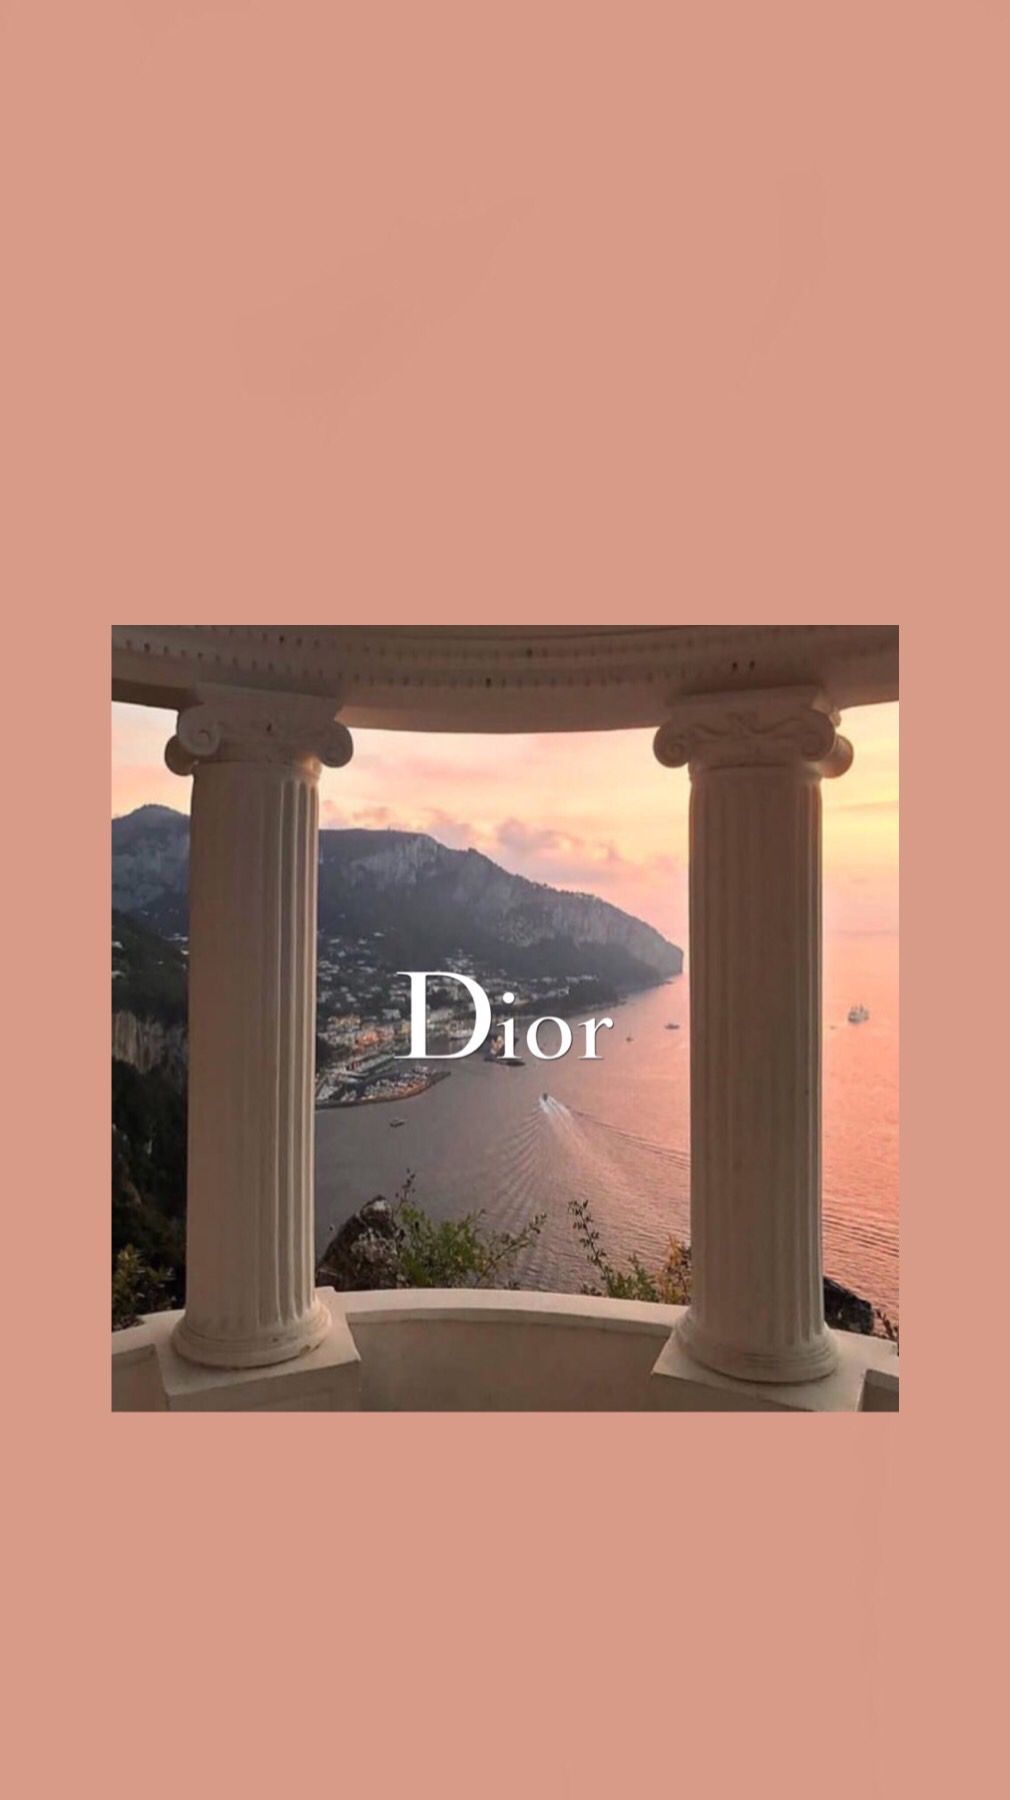 Dior Monogram wallpaper  Monogram wallpaper, Pink wallpaper girly